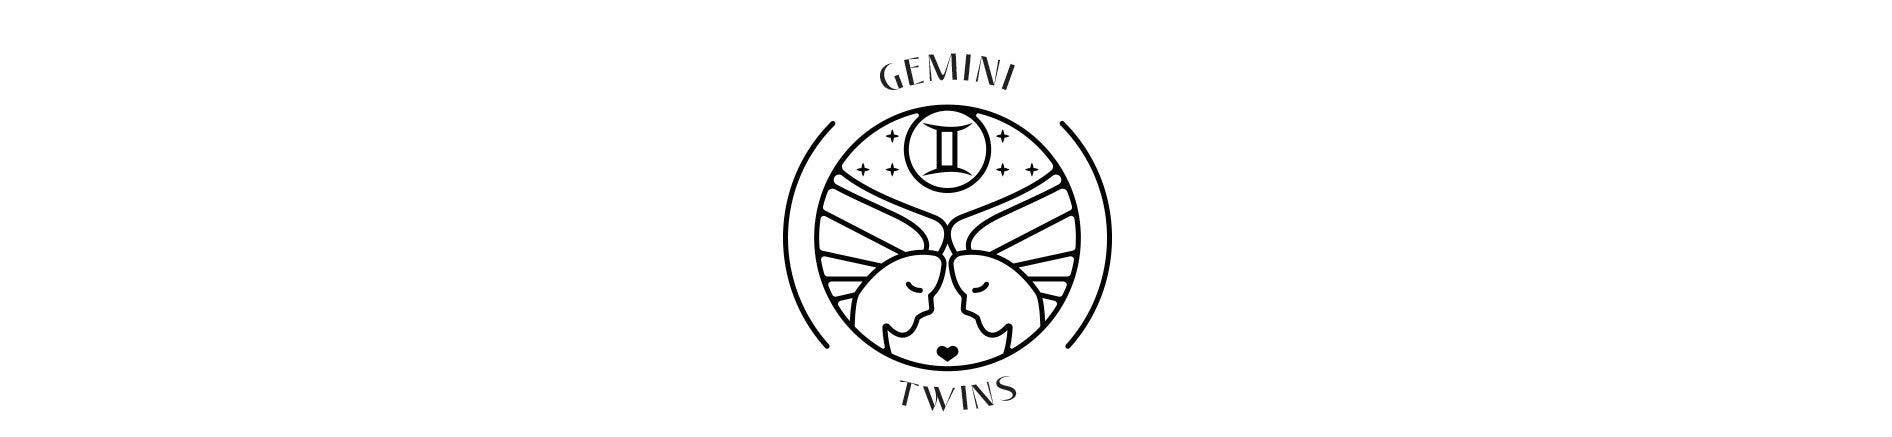 Broken English Jewelry - Zodiac Gemini